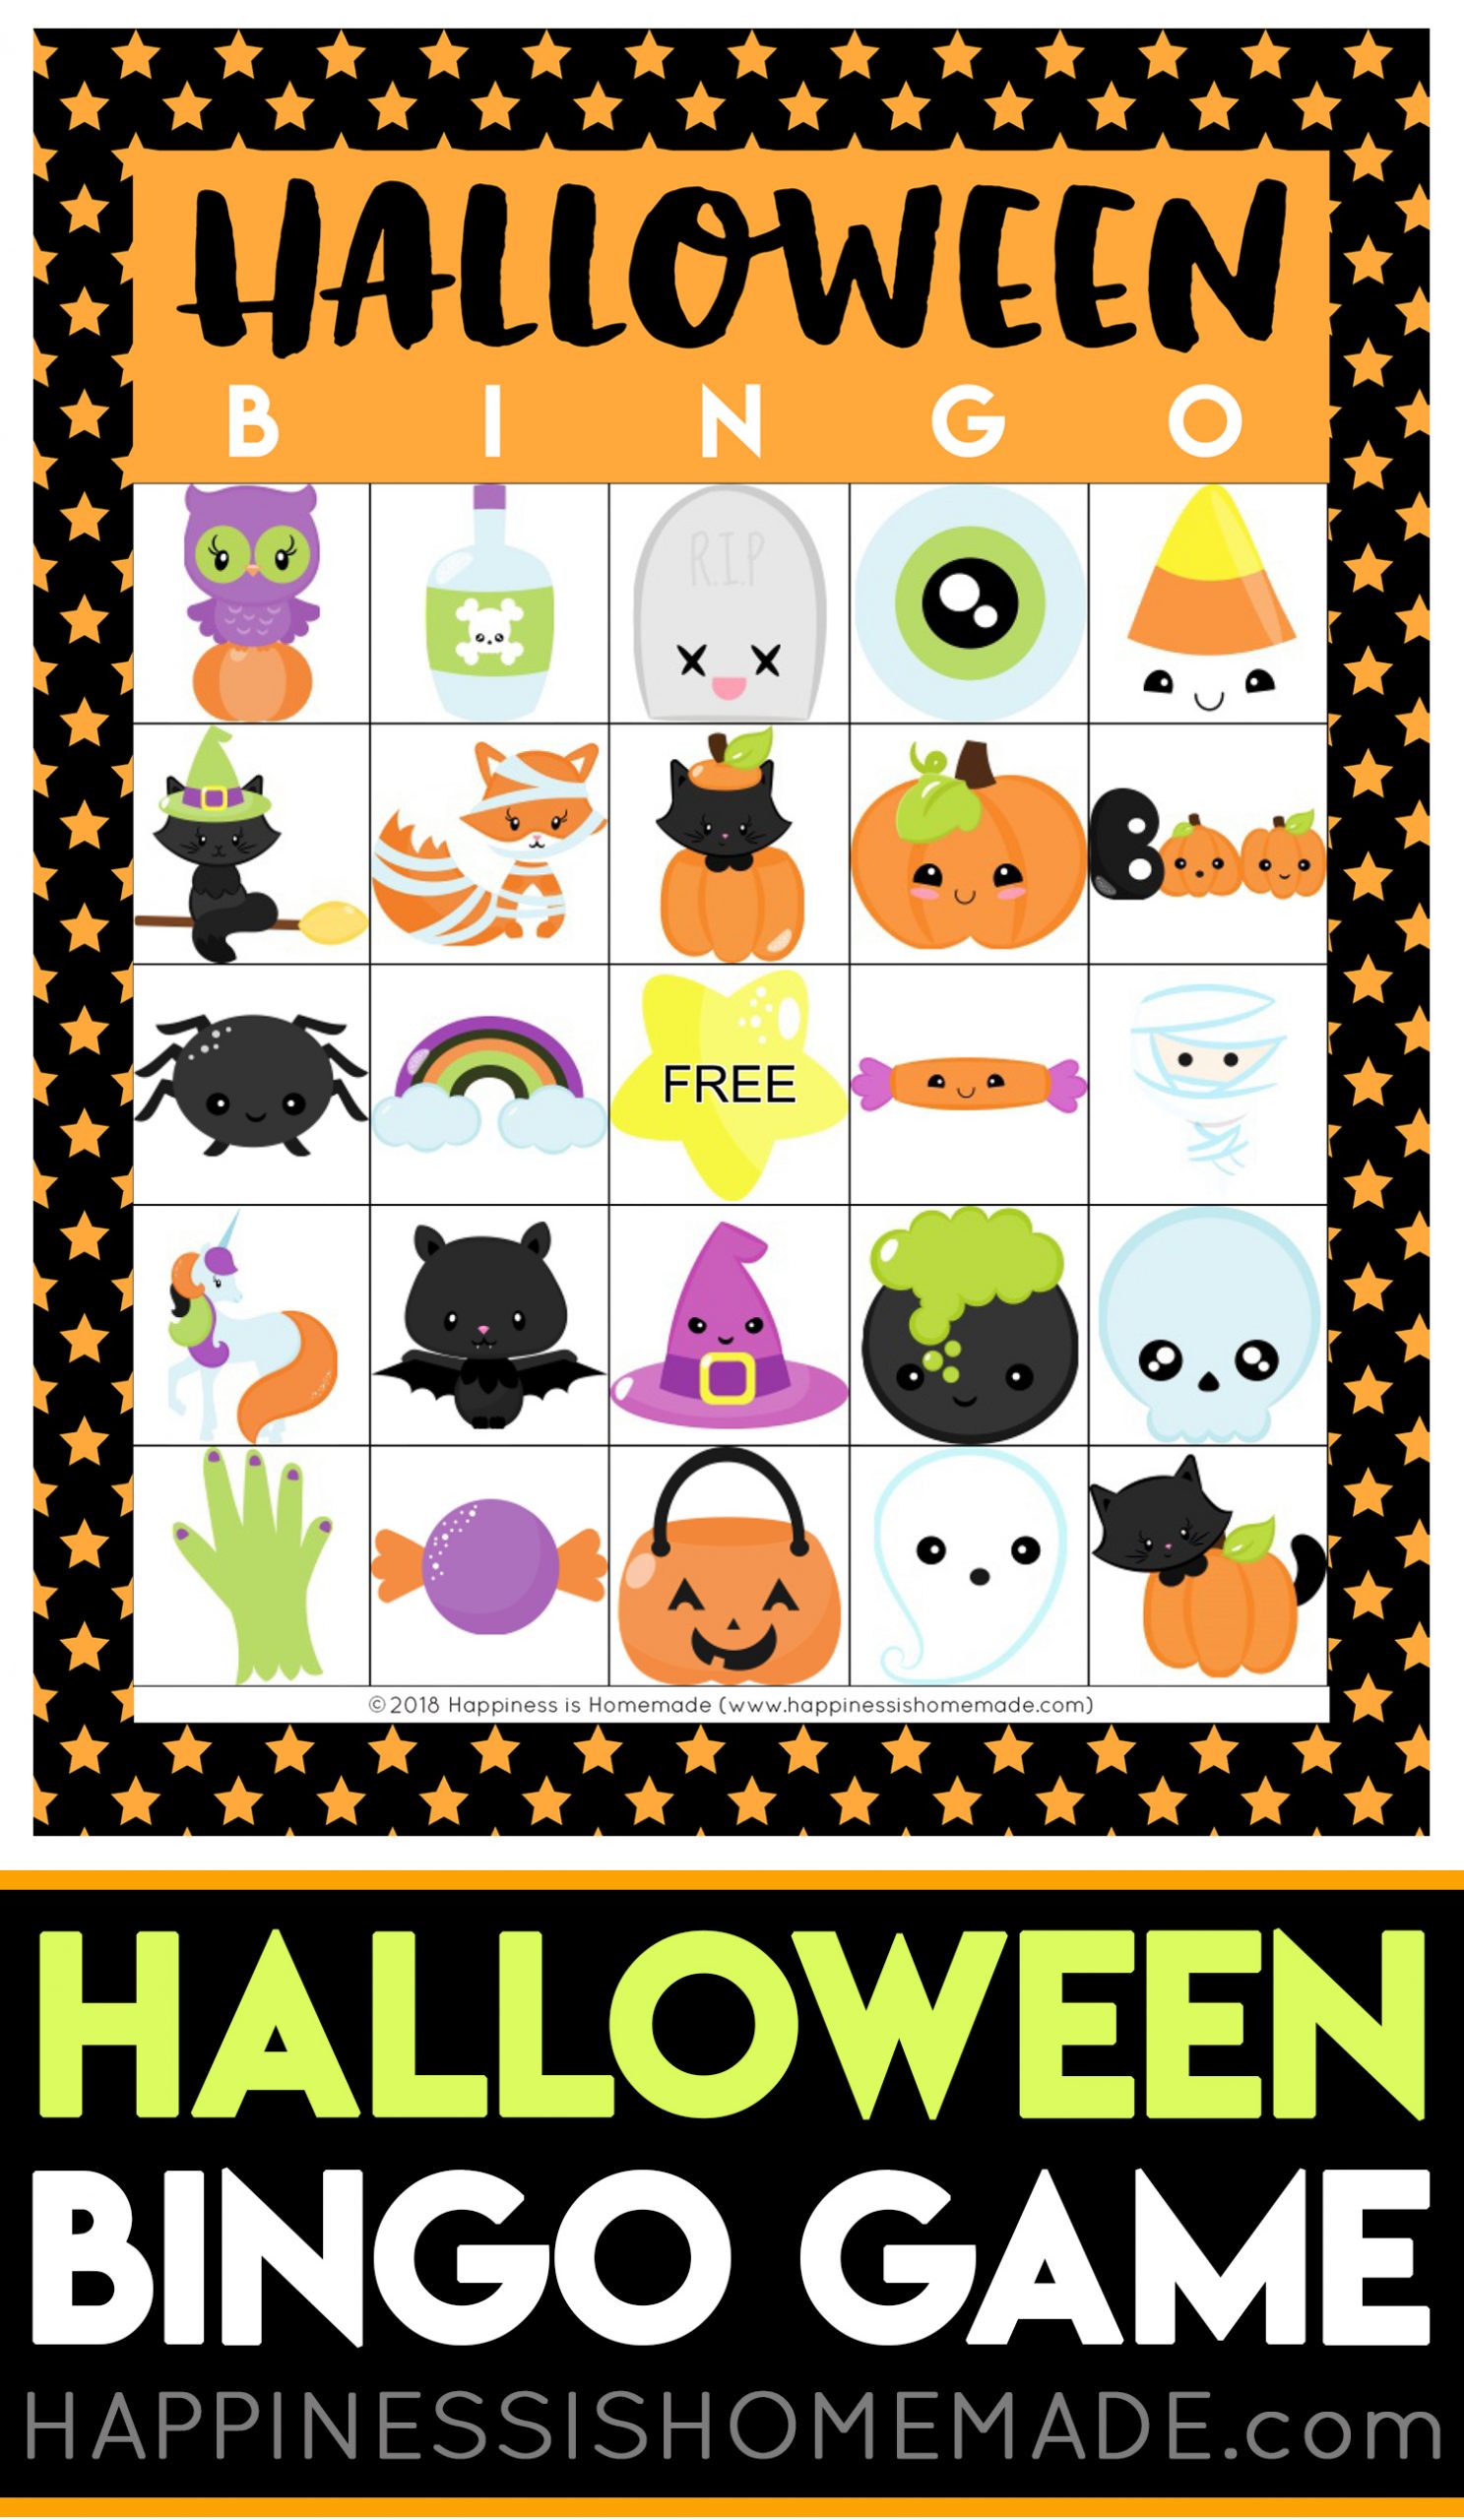 Printable Halloween Bingo Game Cards - Happiness Is Homemade